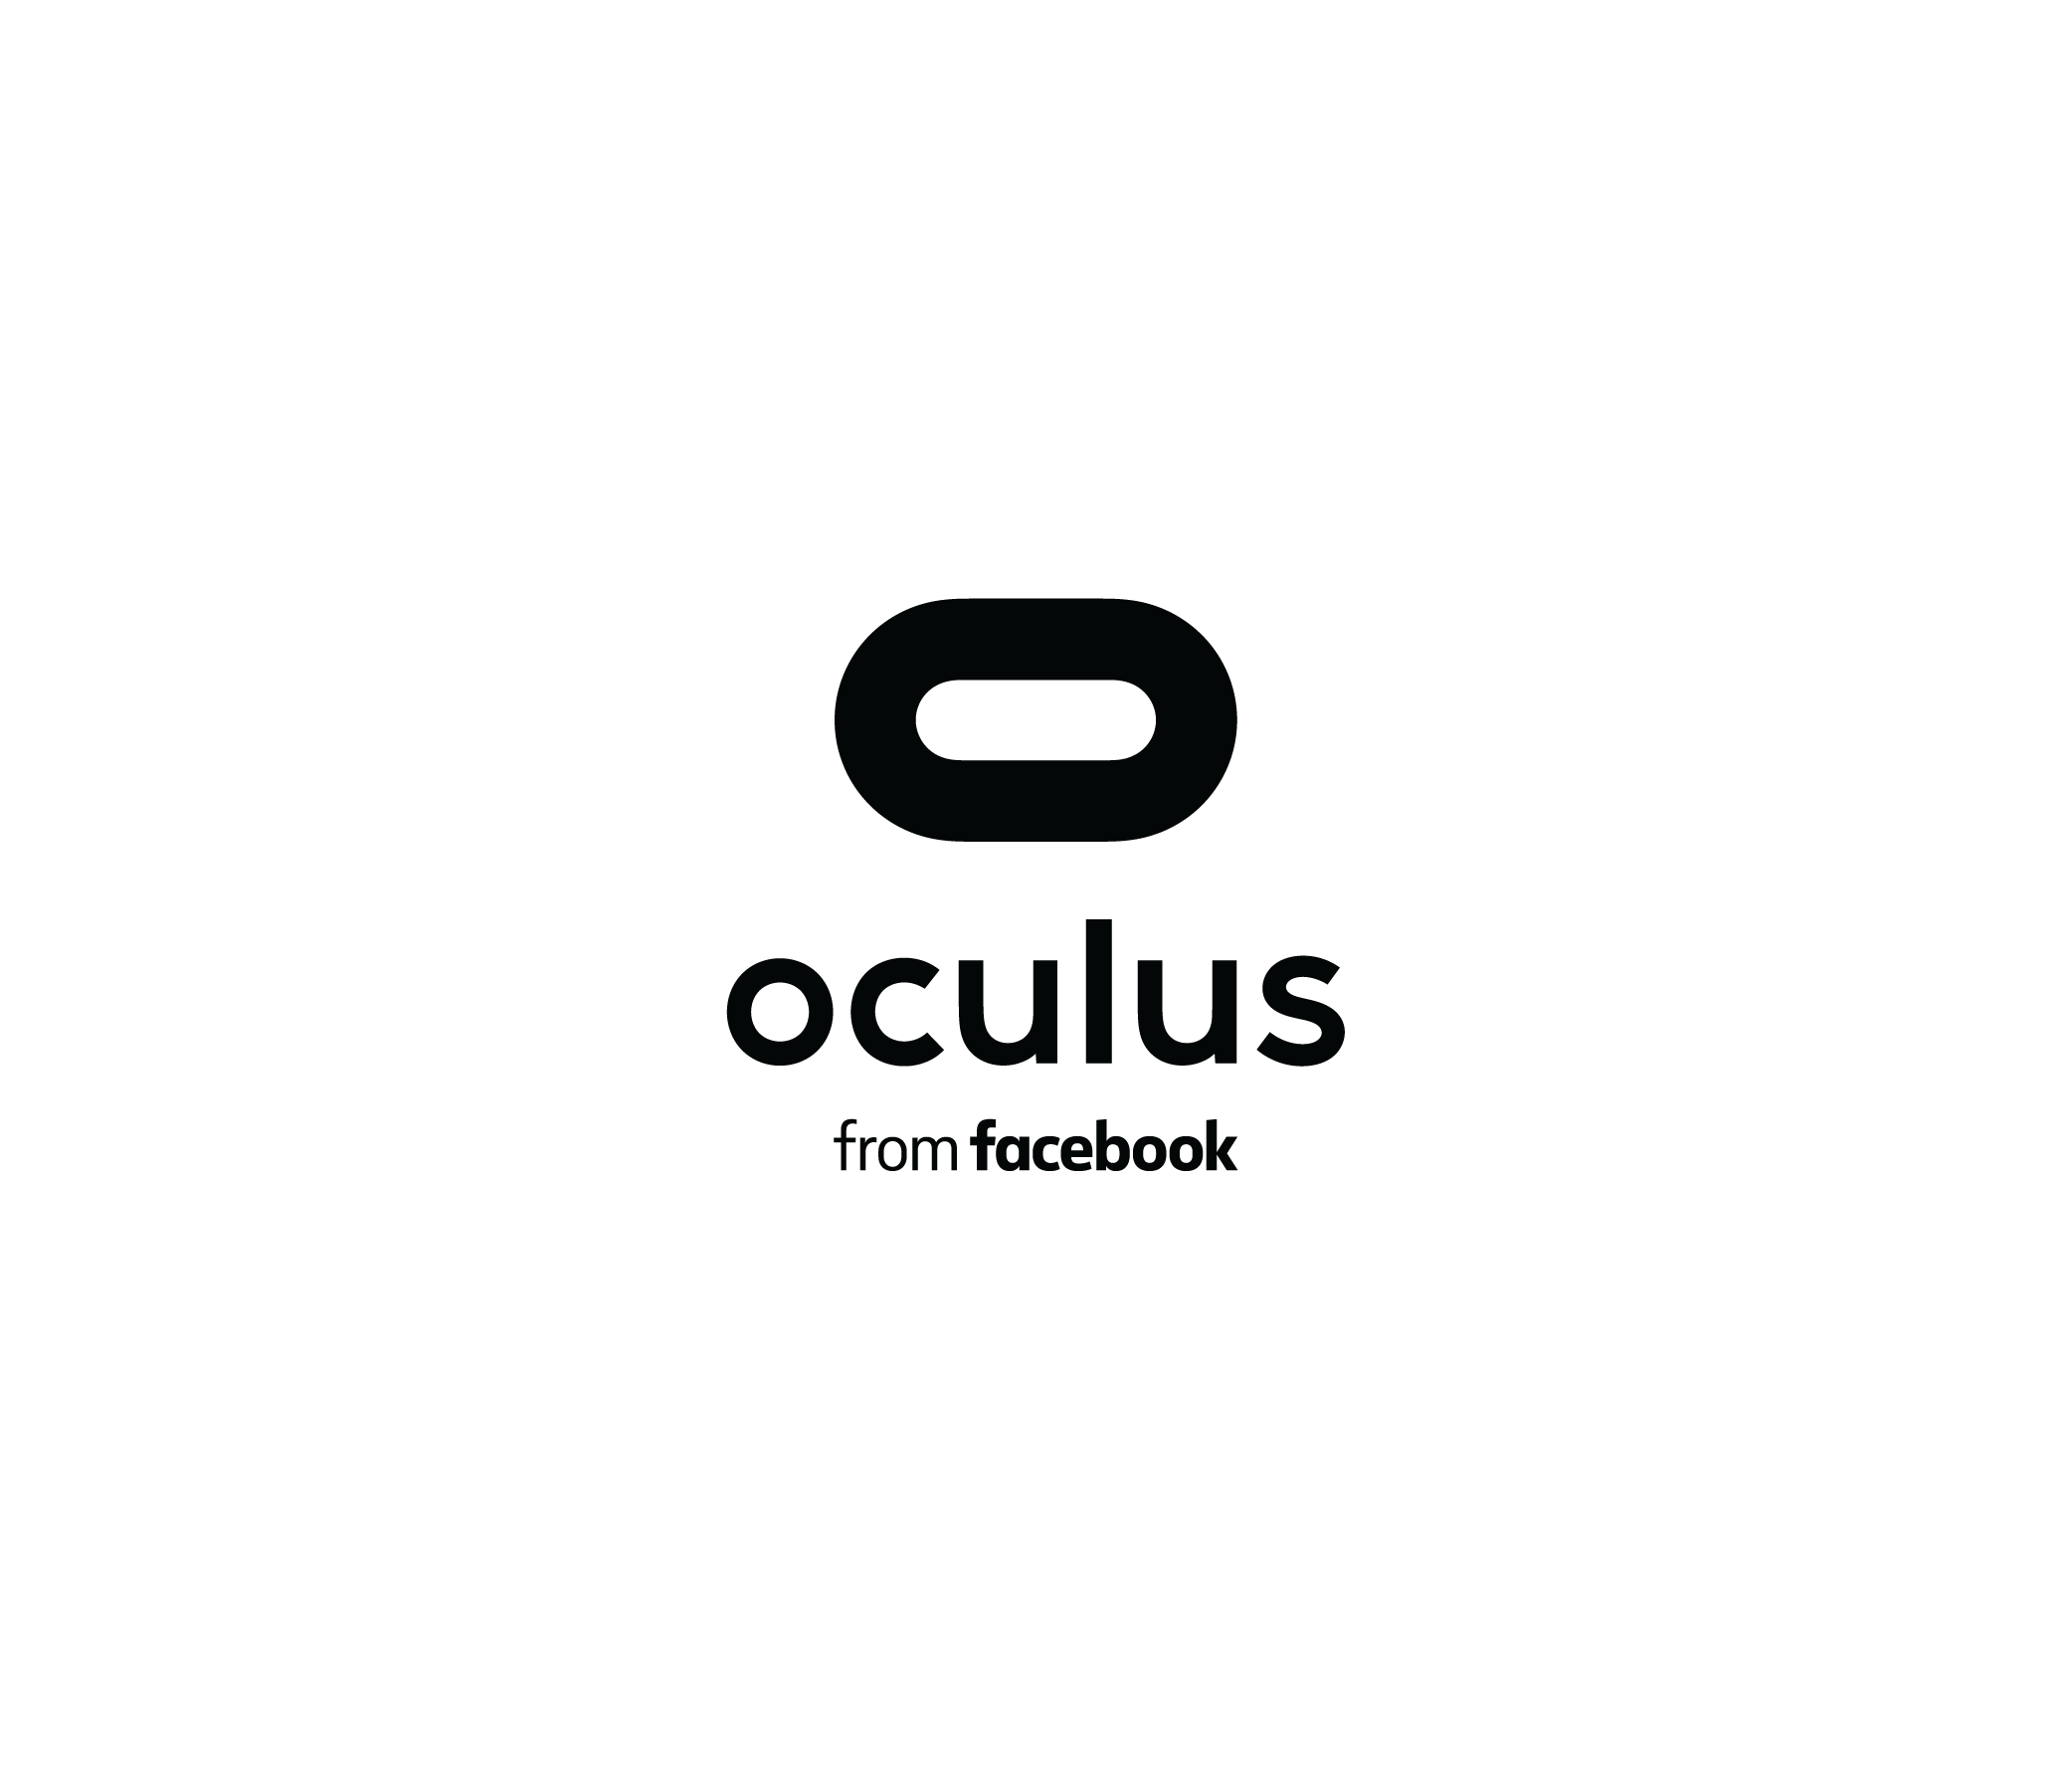 Oculus Facebook logo